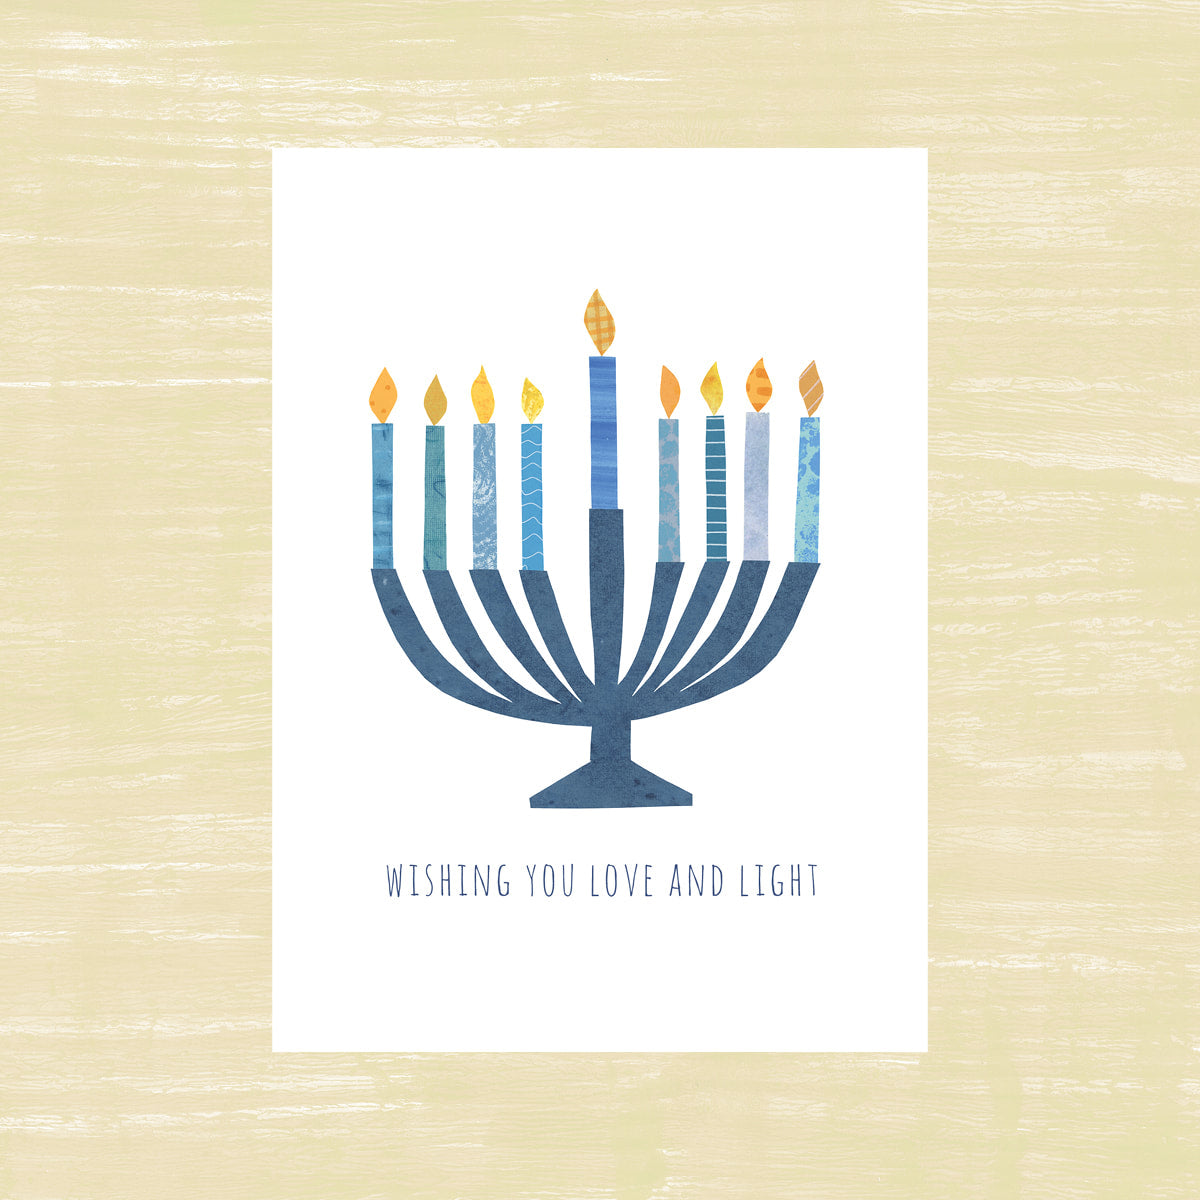 Happy Hanukkah - Greeting Card